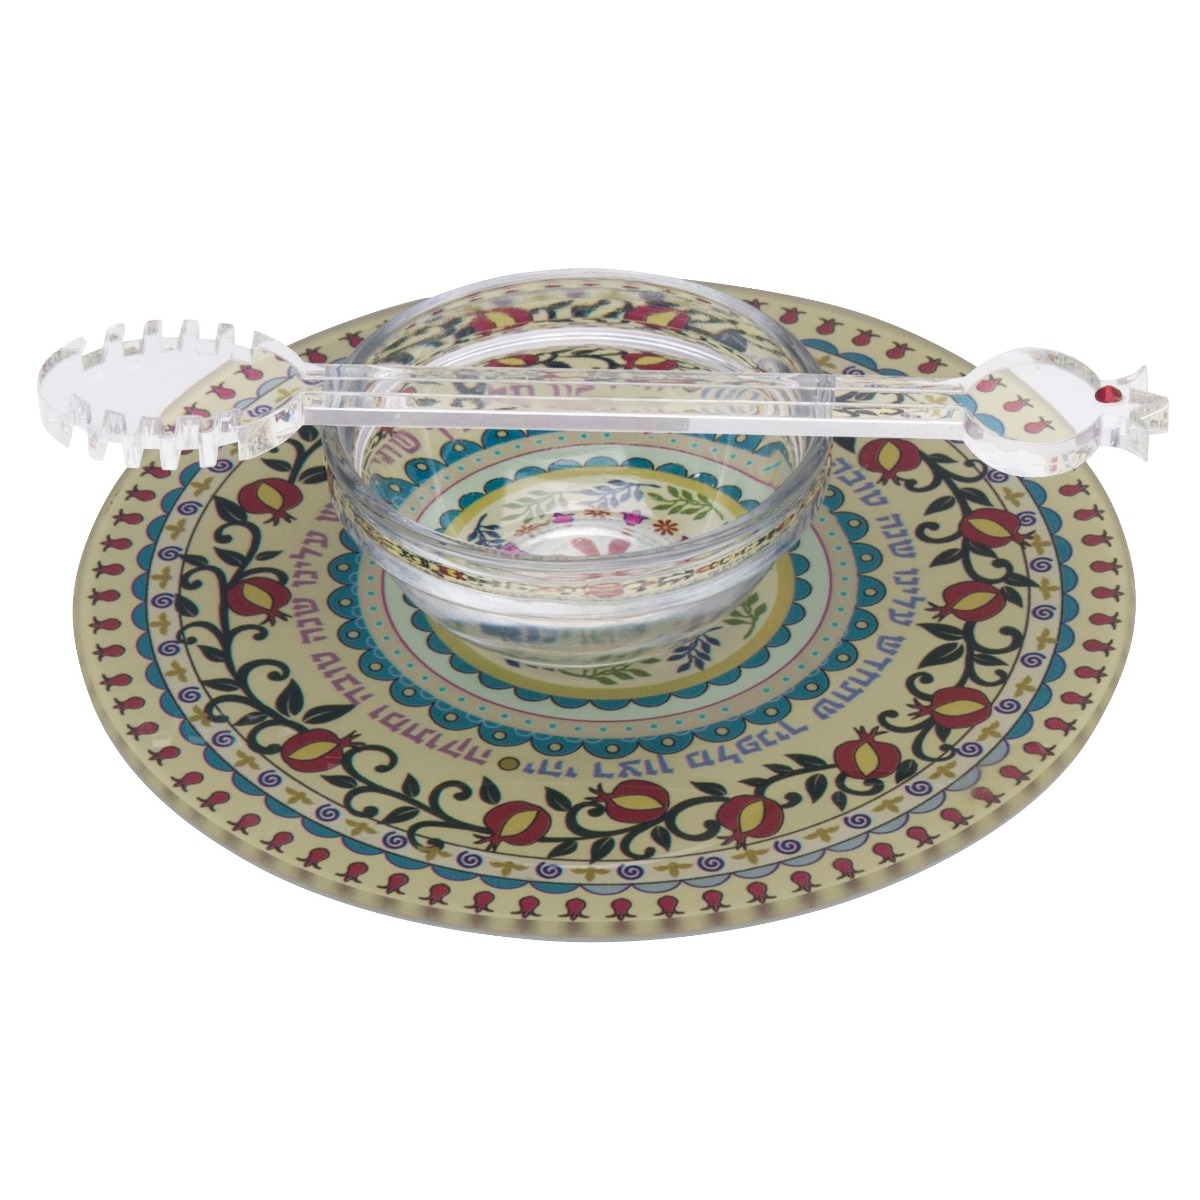 Dorit Judaica Pomegranate Glass Plate and Honey Dish Set - Multicolored - 1